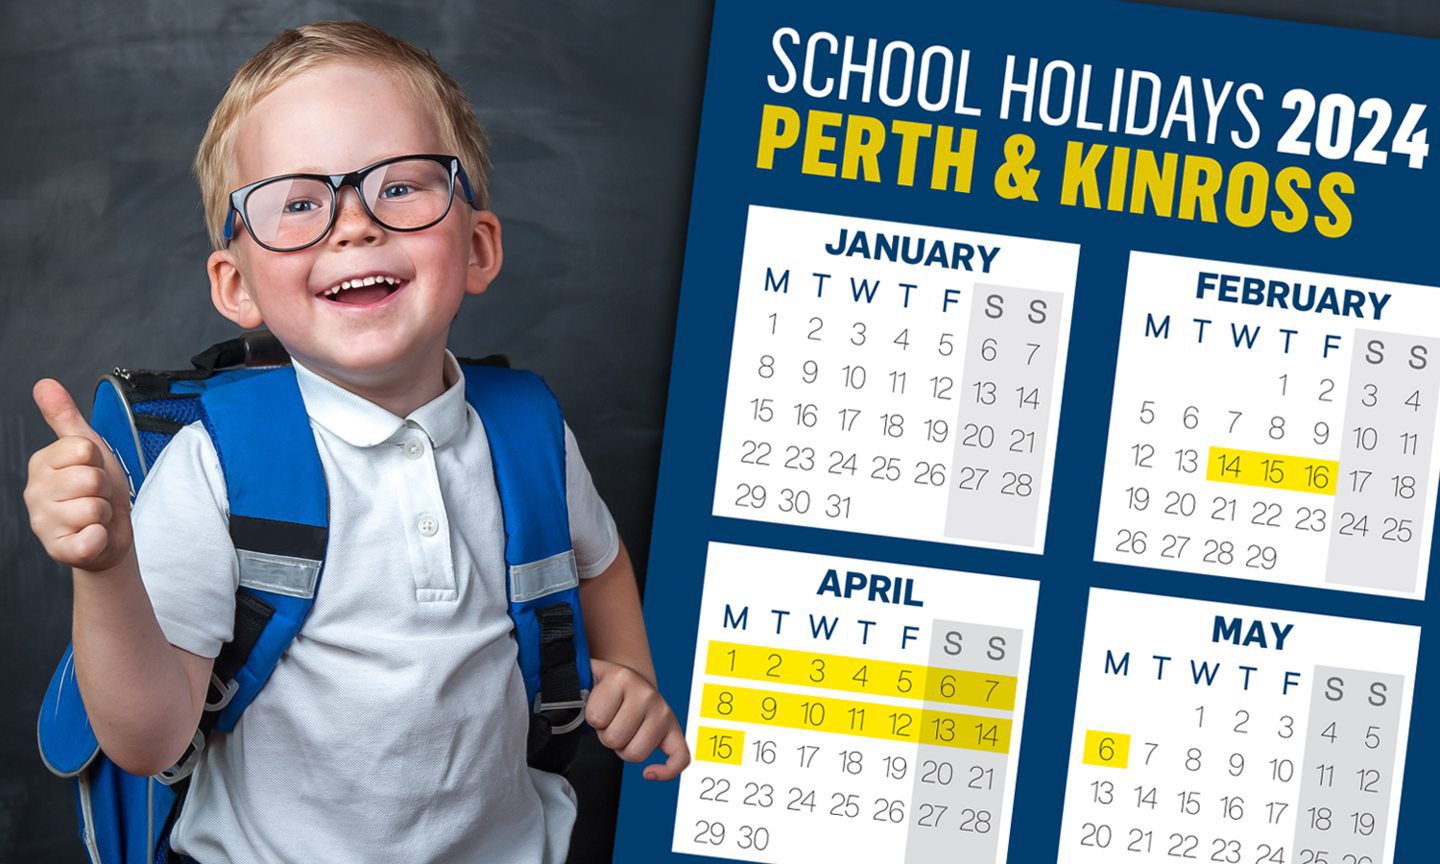 Perth and Kinross school holidays 2024 calendars